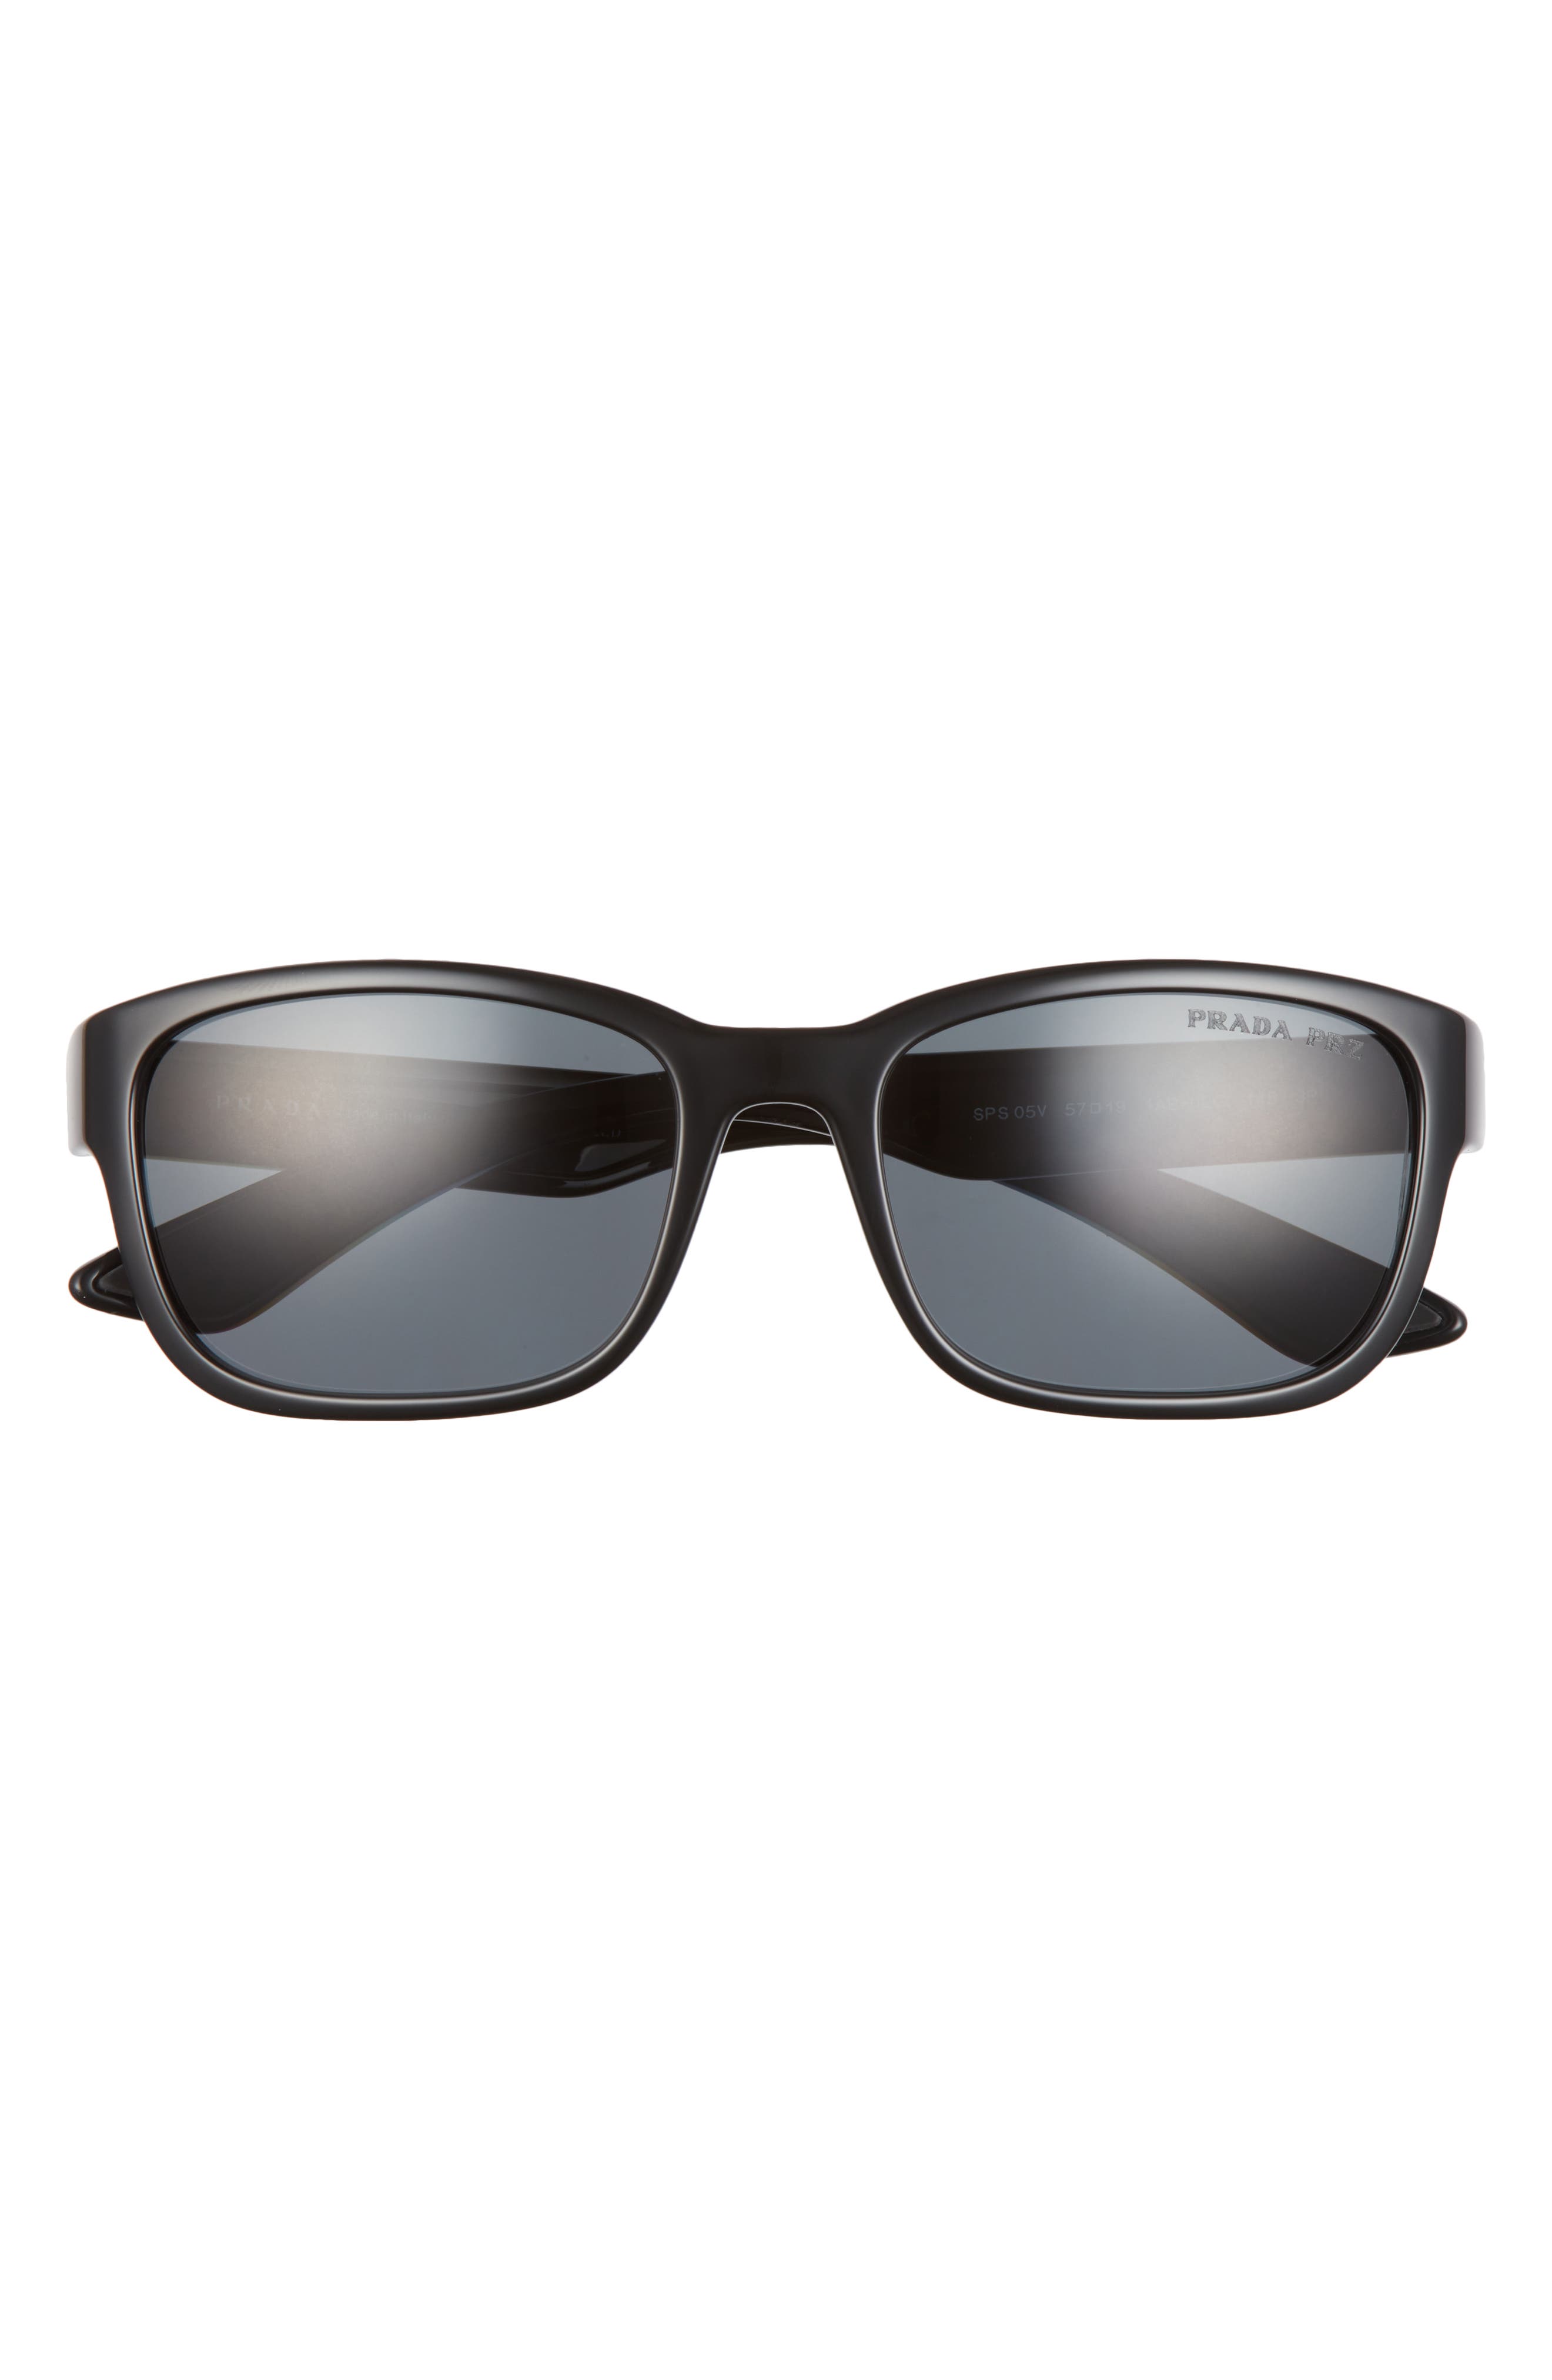 Prada Linea Rossa Impavid 57mm Polarized Wraparound Sunglasses in Black/Dark Grey Polarized at Nordstrom